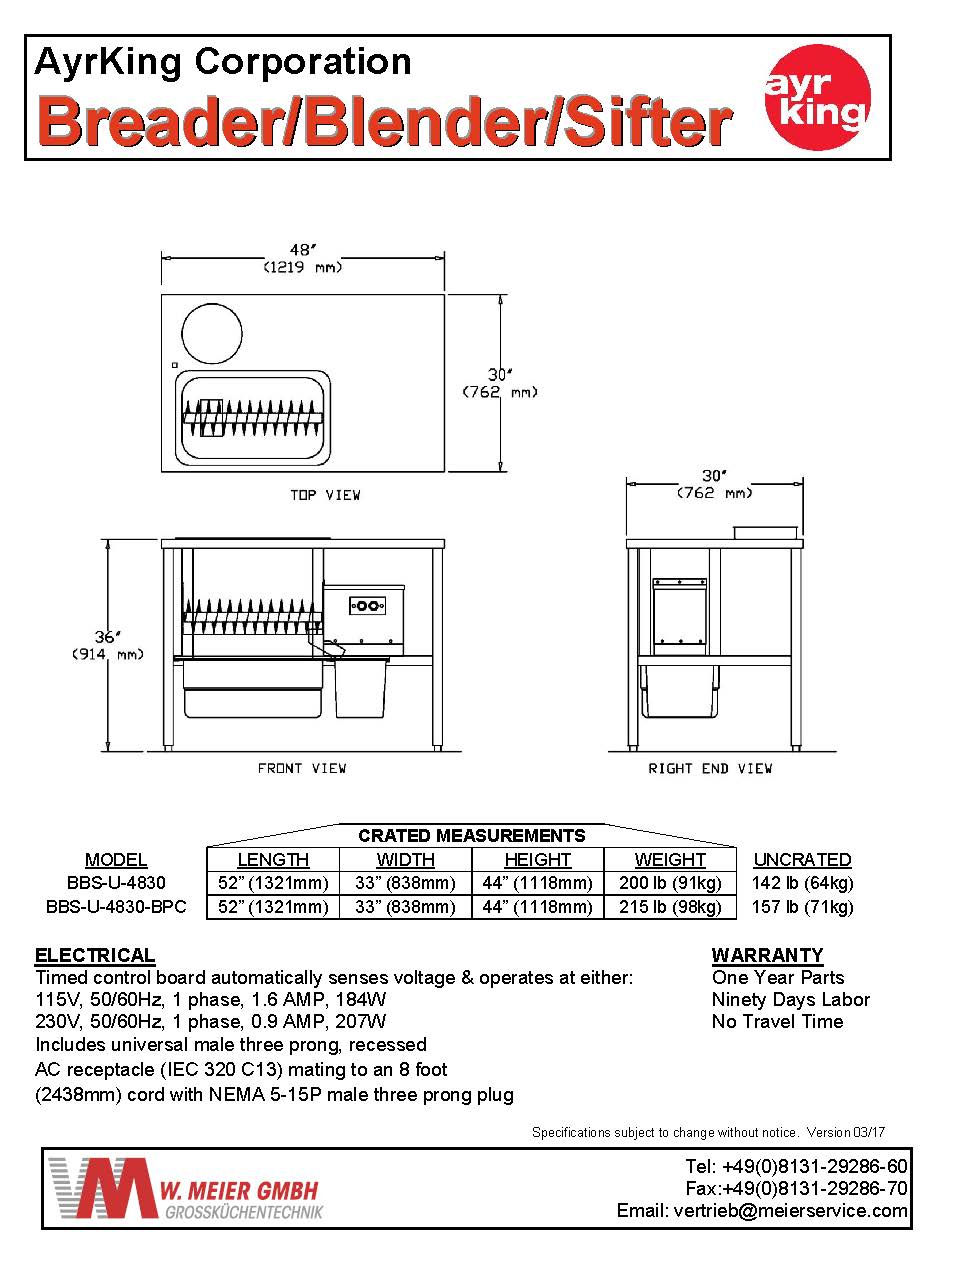 AyrKing BBS-U-4830 Blender/Sifter Table Panierstation